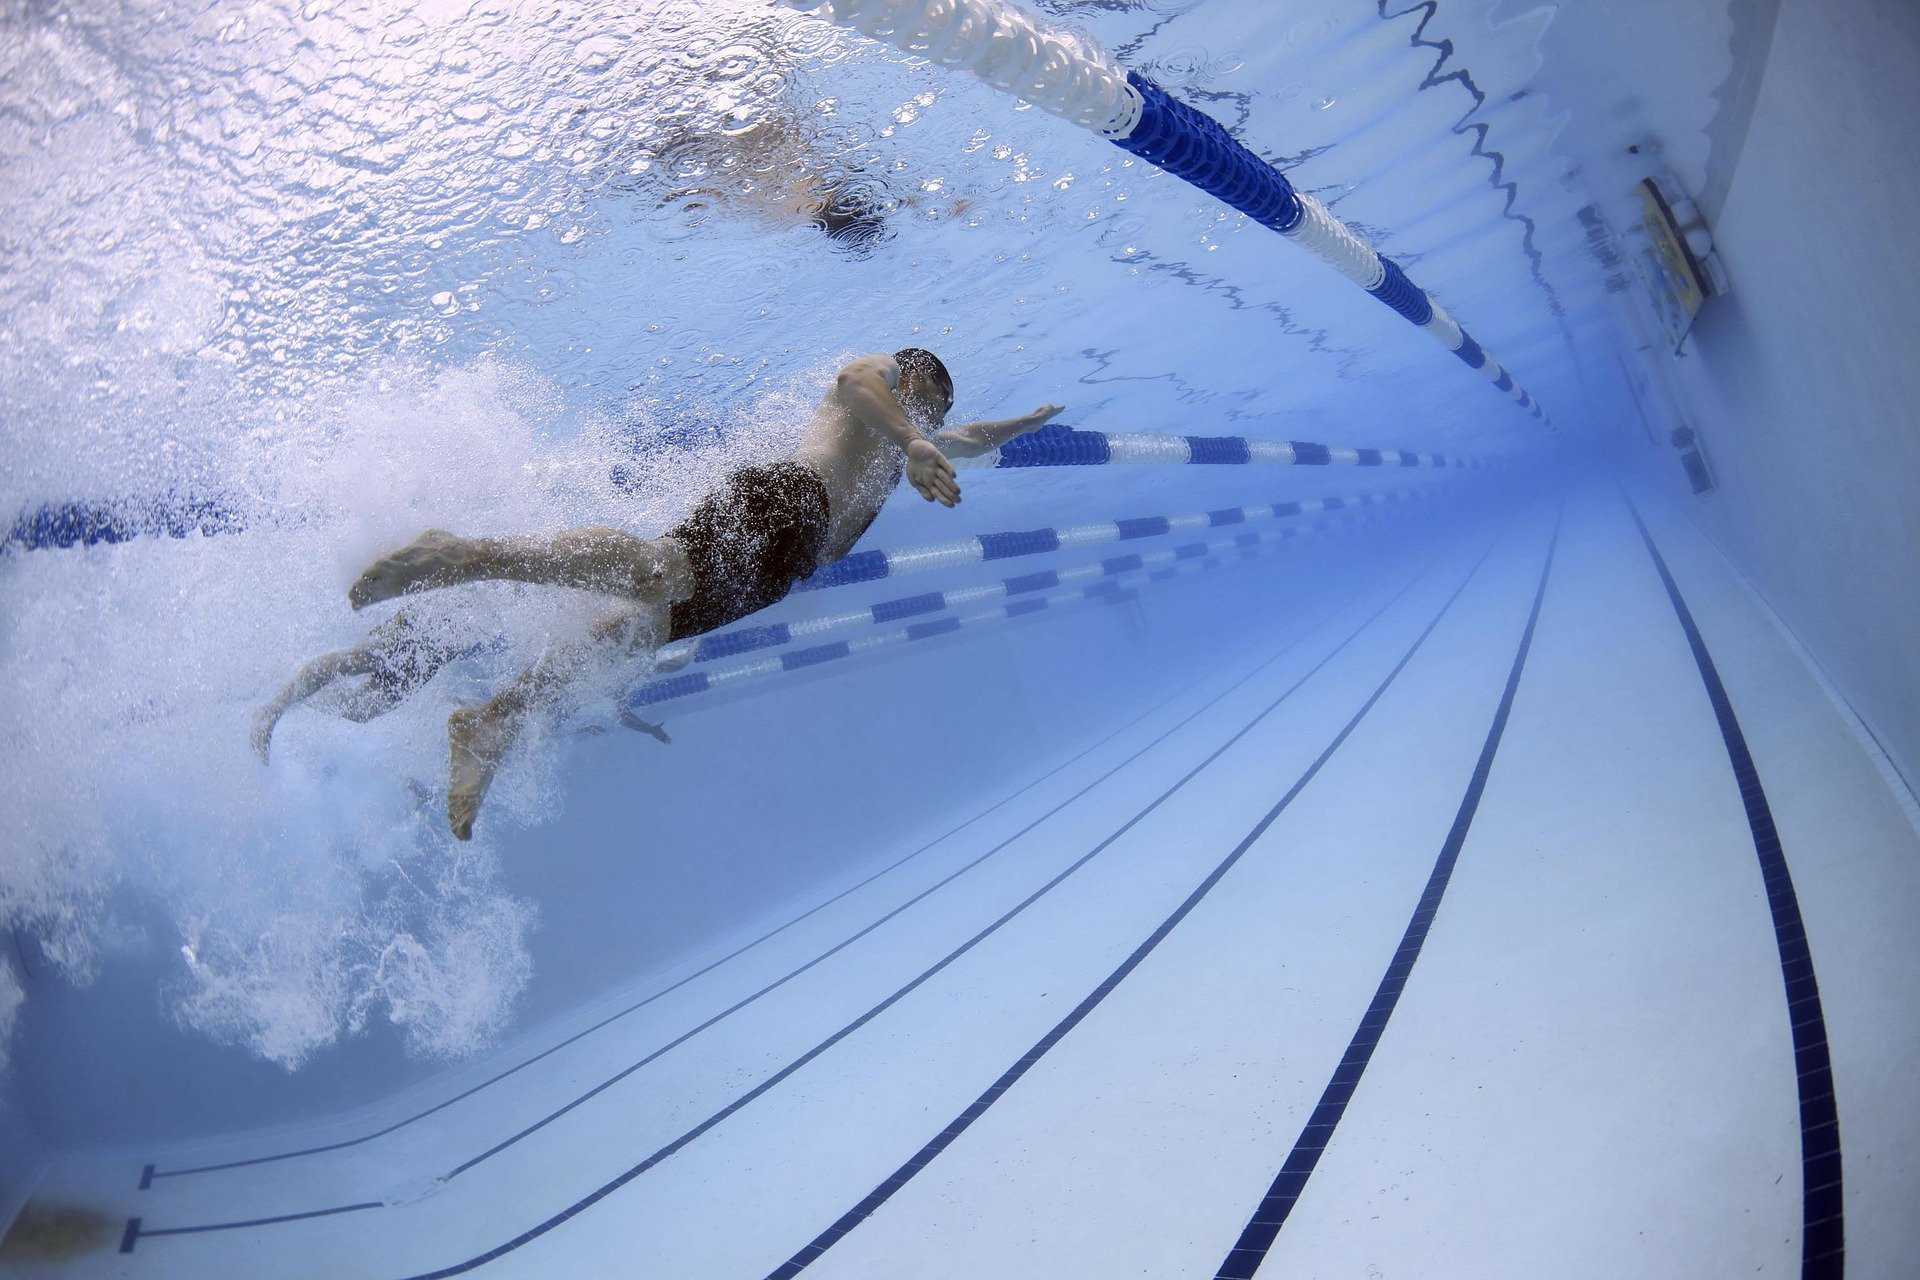 Schwimmer im Pool - by David Mark from Pixabay